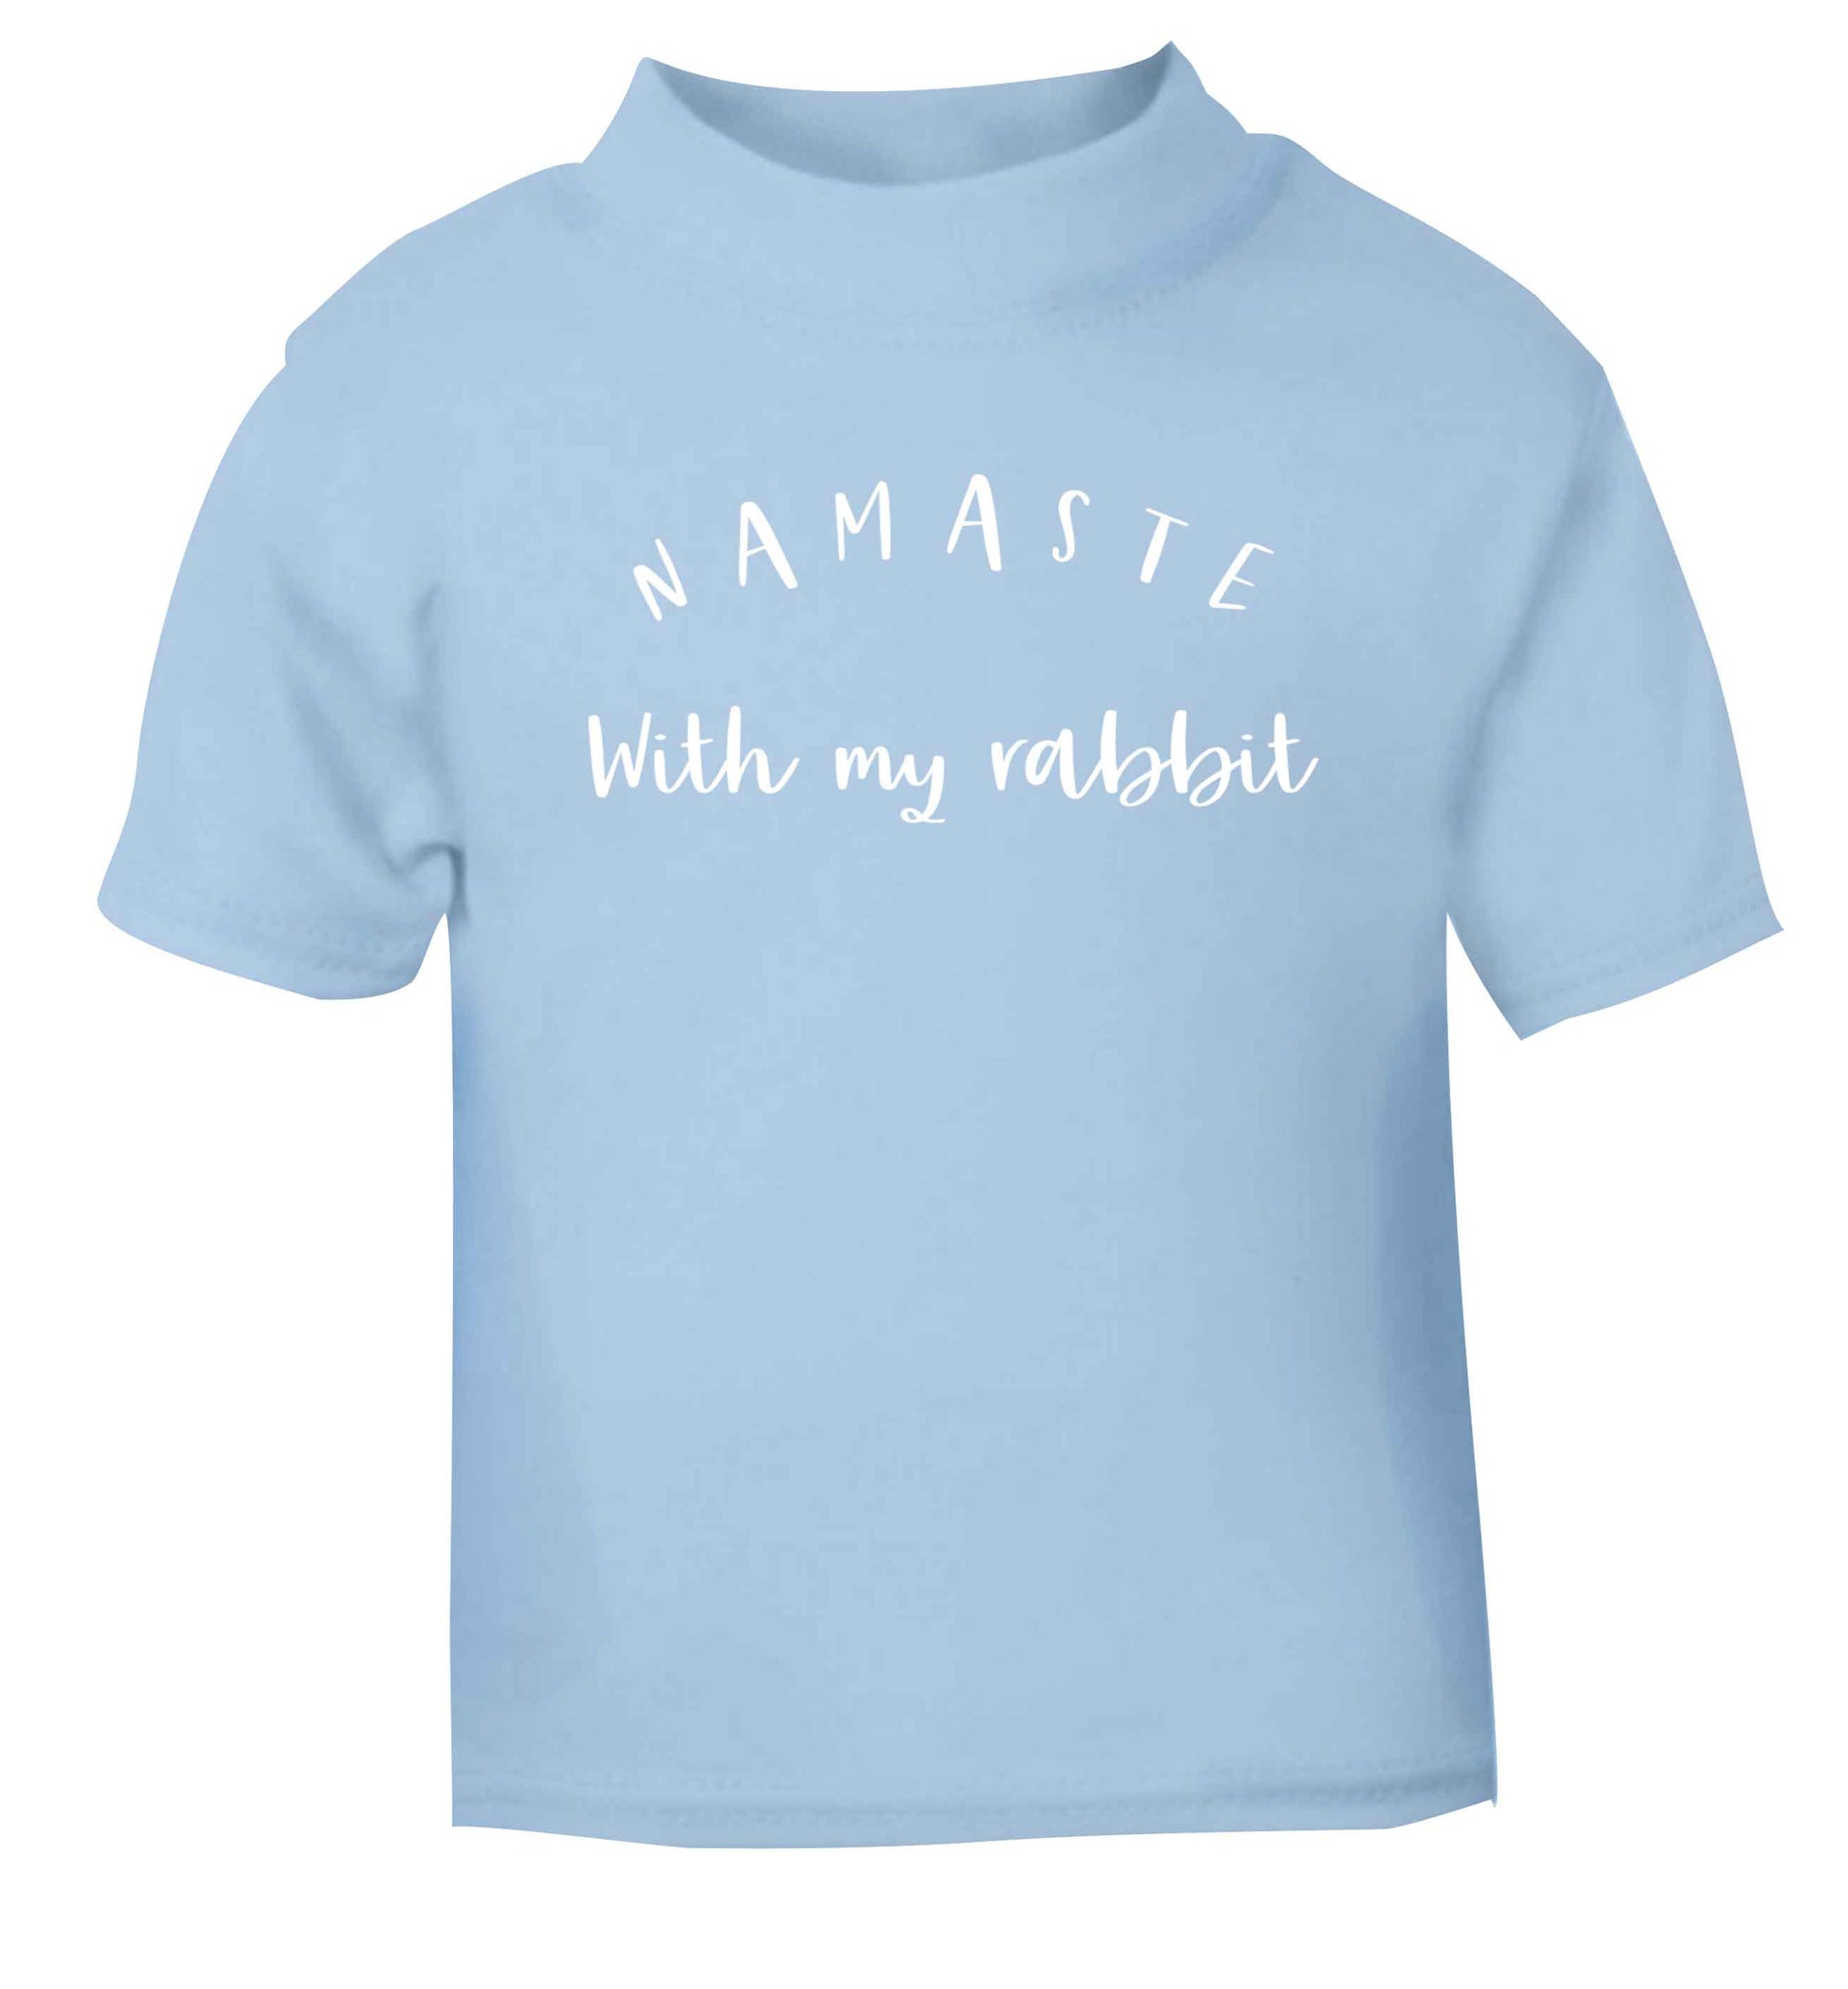 Namaste with my rabbit light blue Baby Toddler Tshirt 2 Years